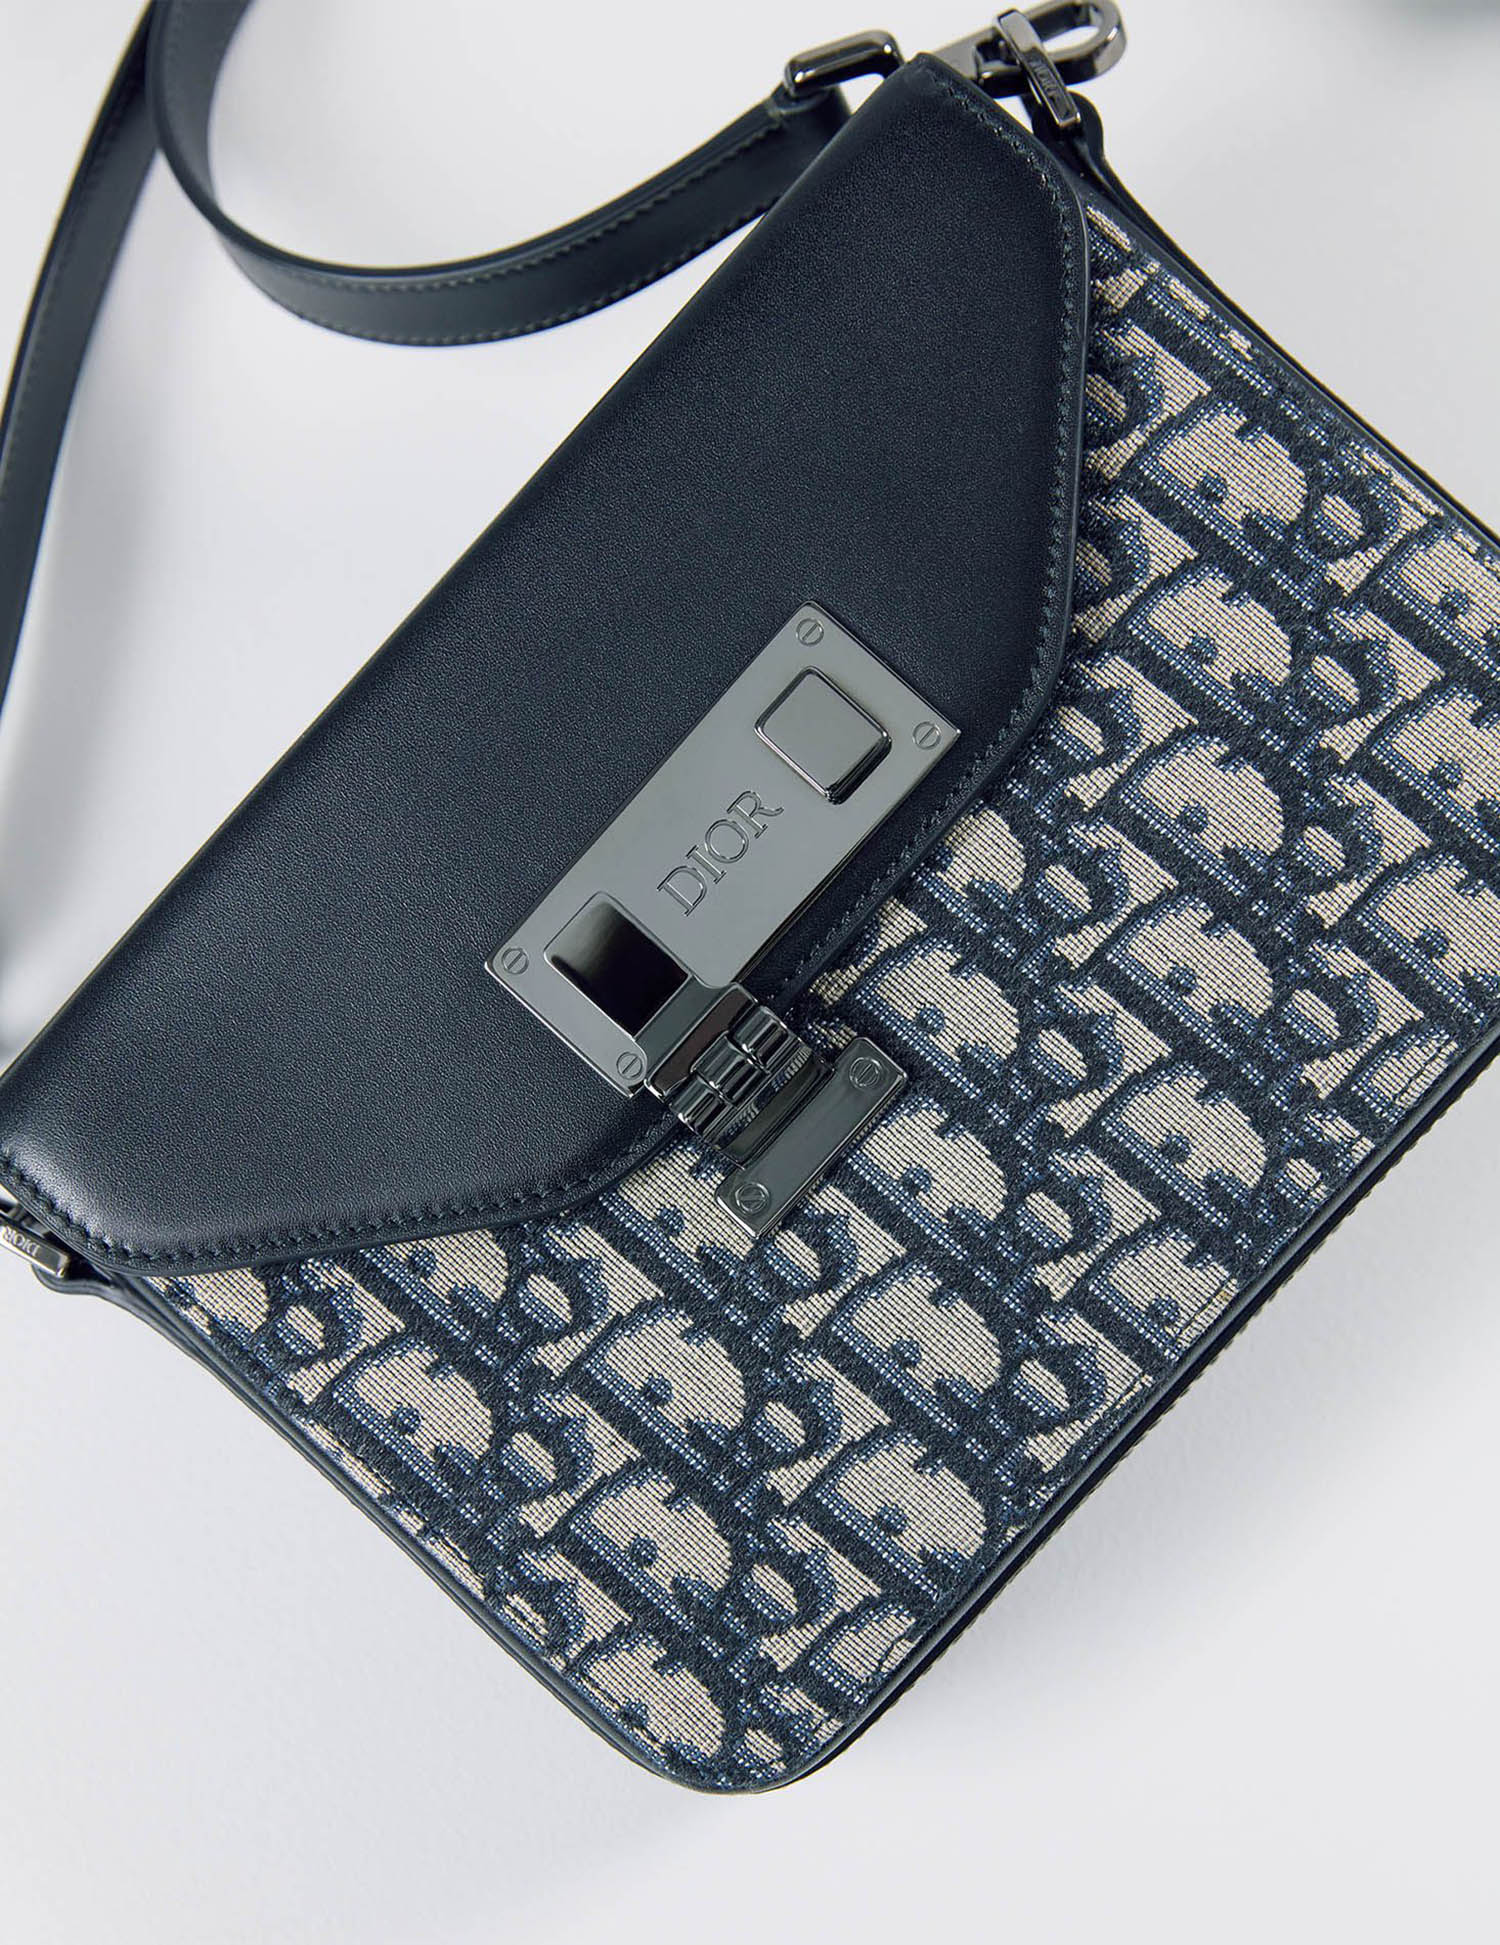 Dior Men presents the Dior Lock bag - fashionotography